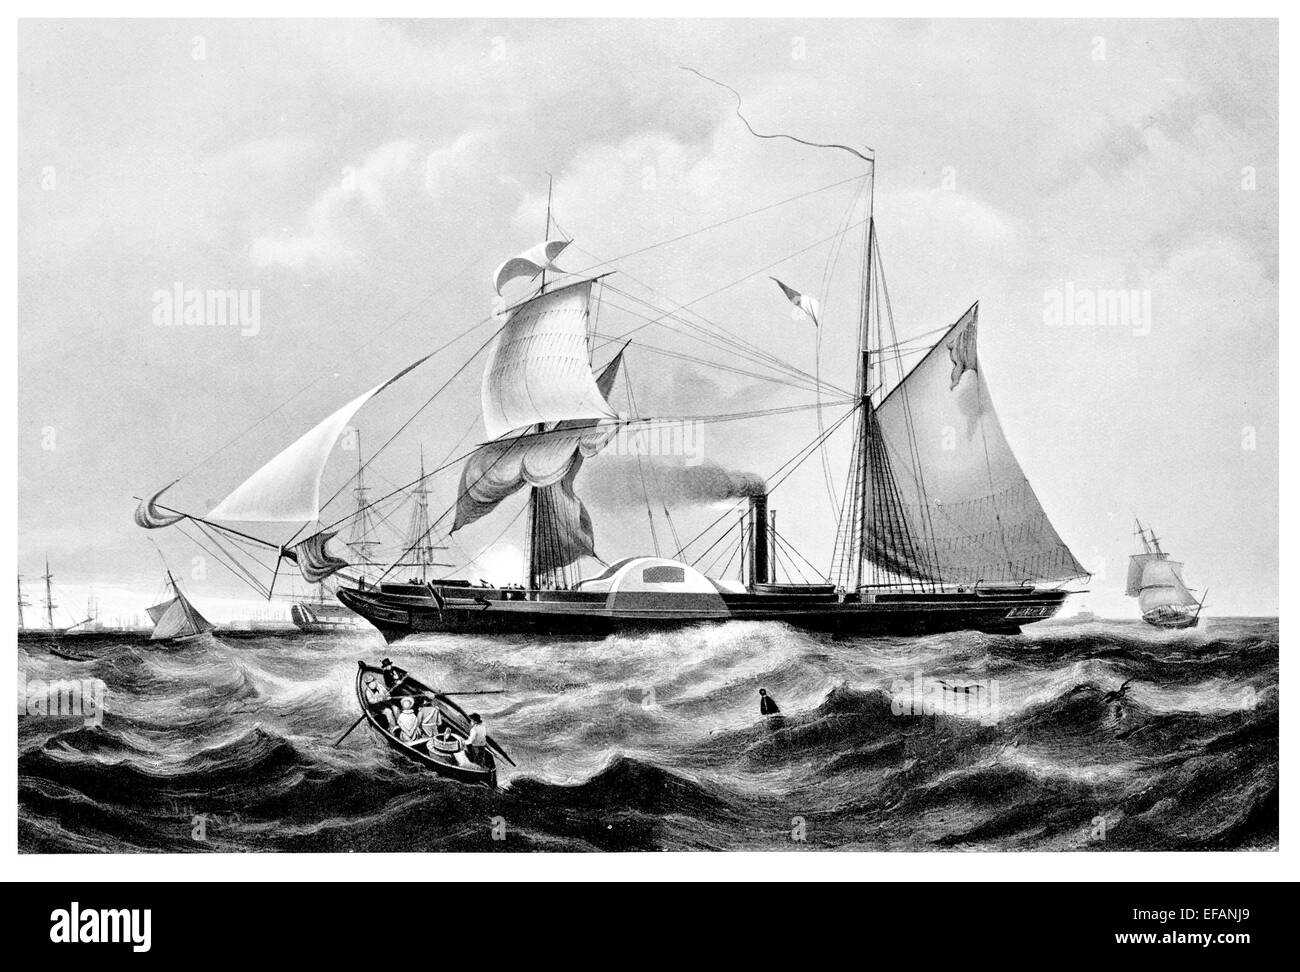 S.m. el vapor Fragata Cyclops 1839 sirvió Guerra Siria 1840 y Crimea. Encuesta de buques para el tendido de cables. Vendido 1863 Foto de stock